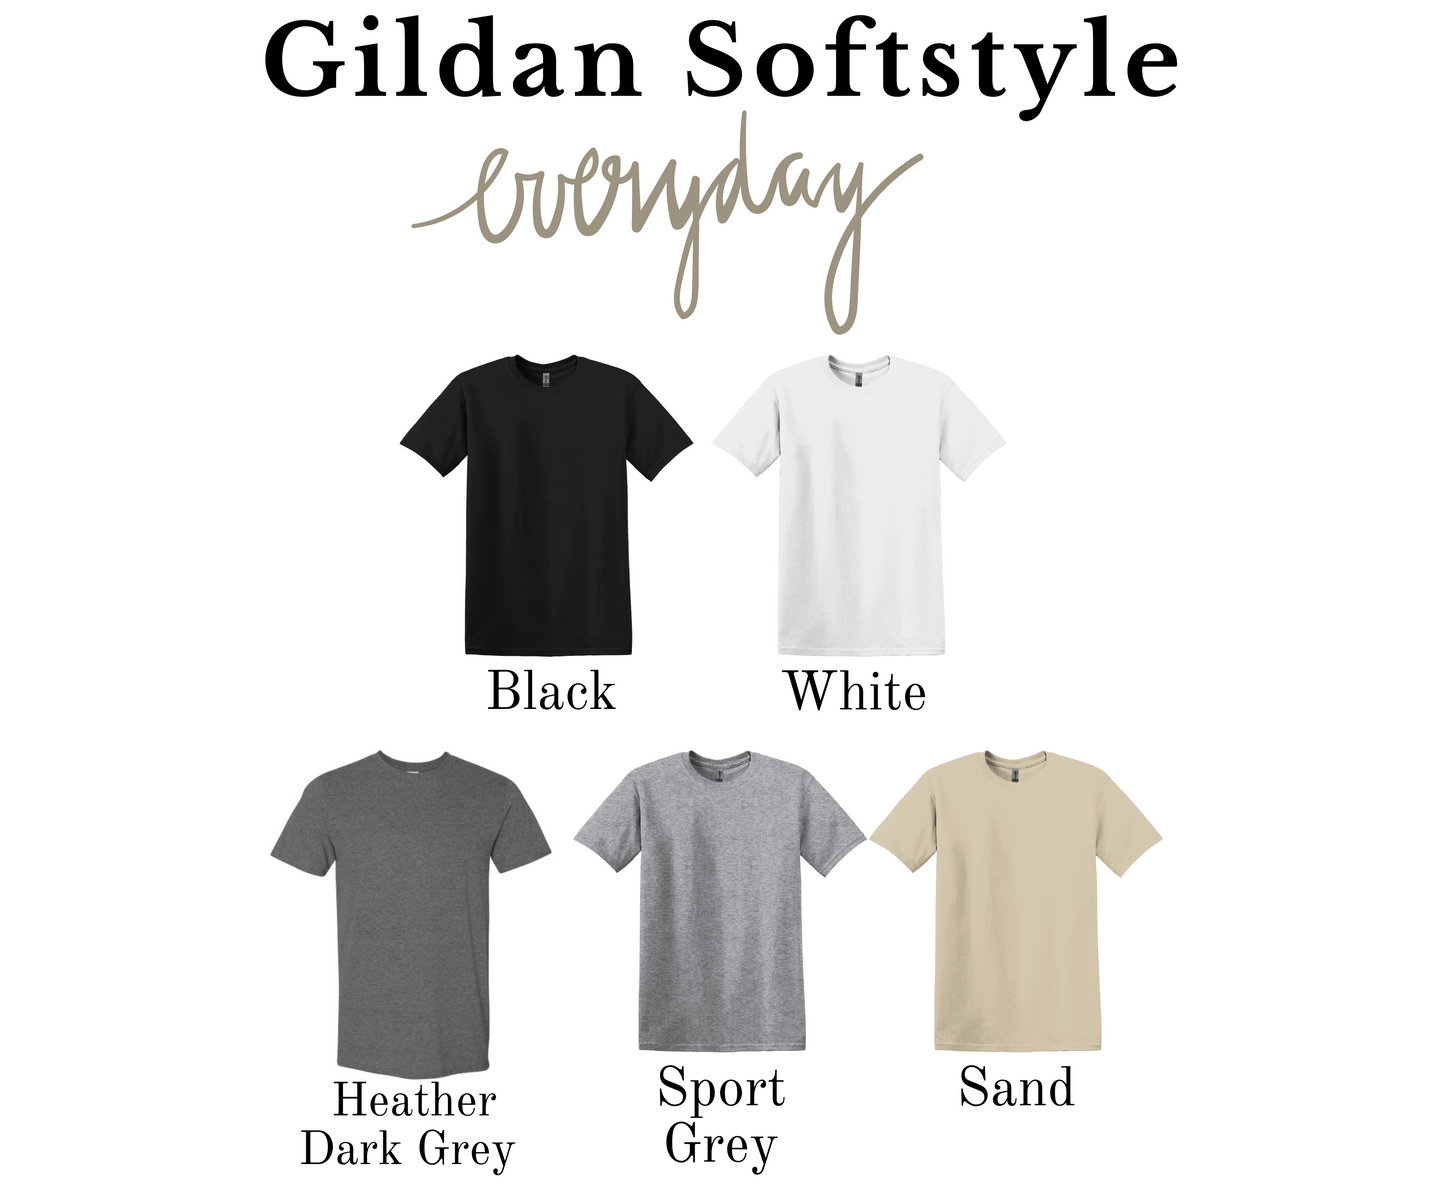 Game Day Knights Gildan Softstyle Sweatshirt or T-shirt